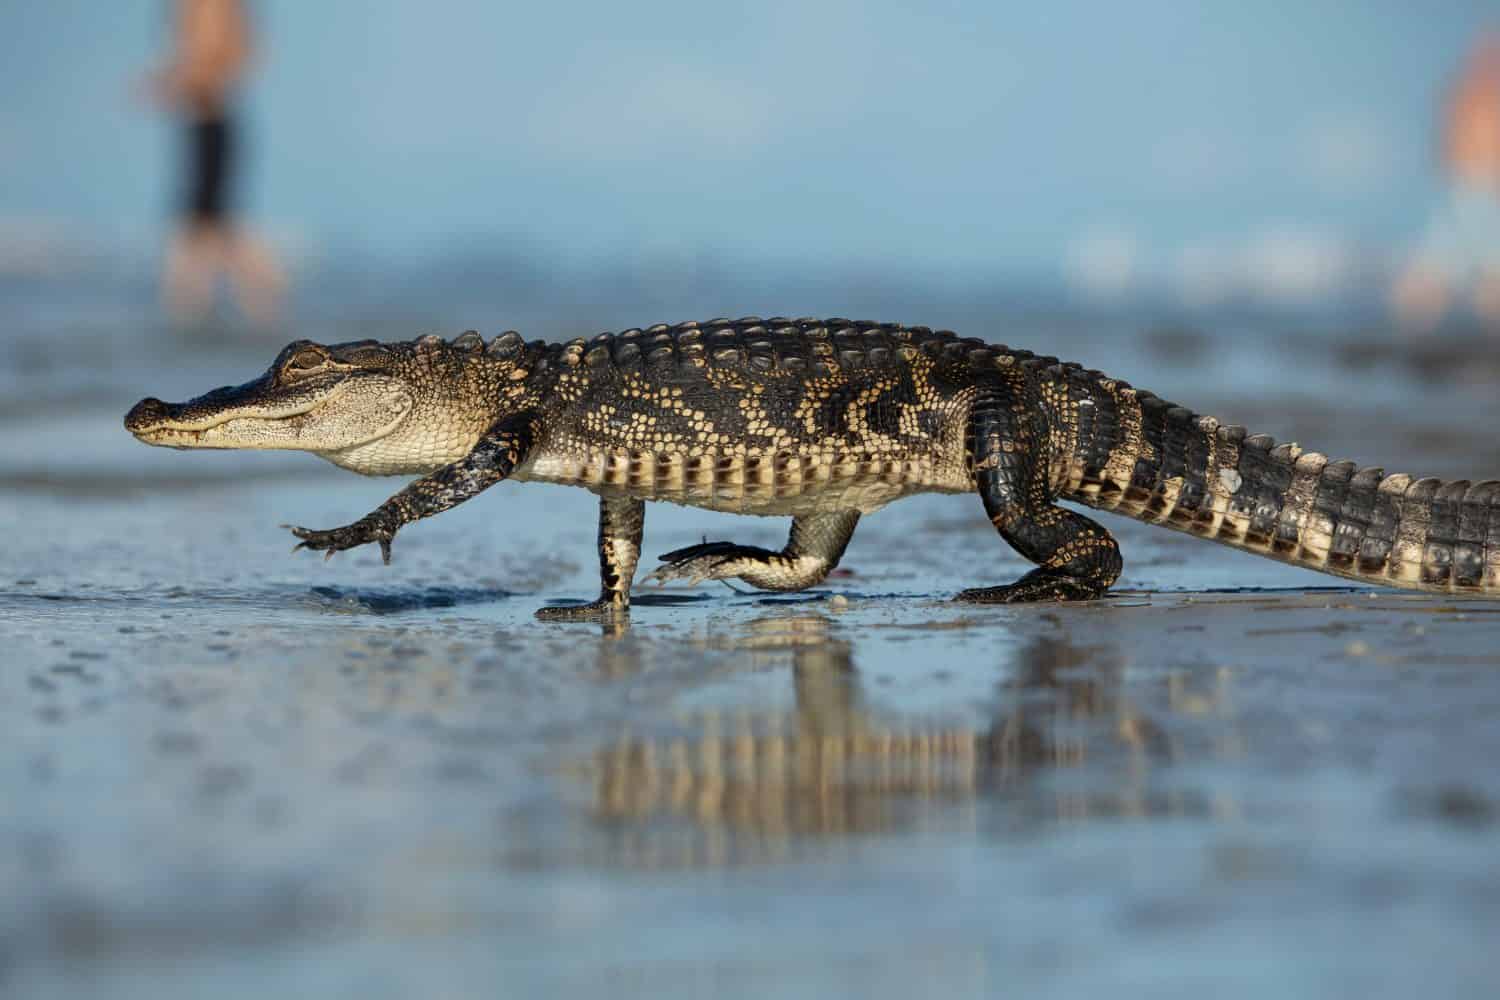 Gator Walking on Florida Beach